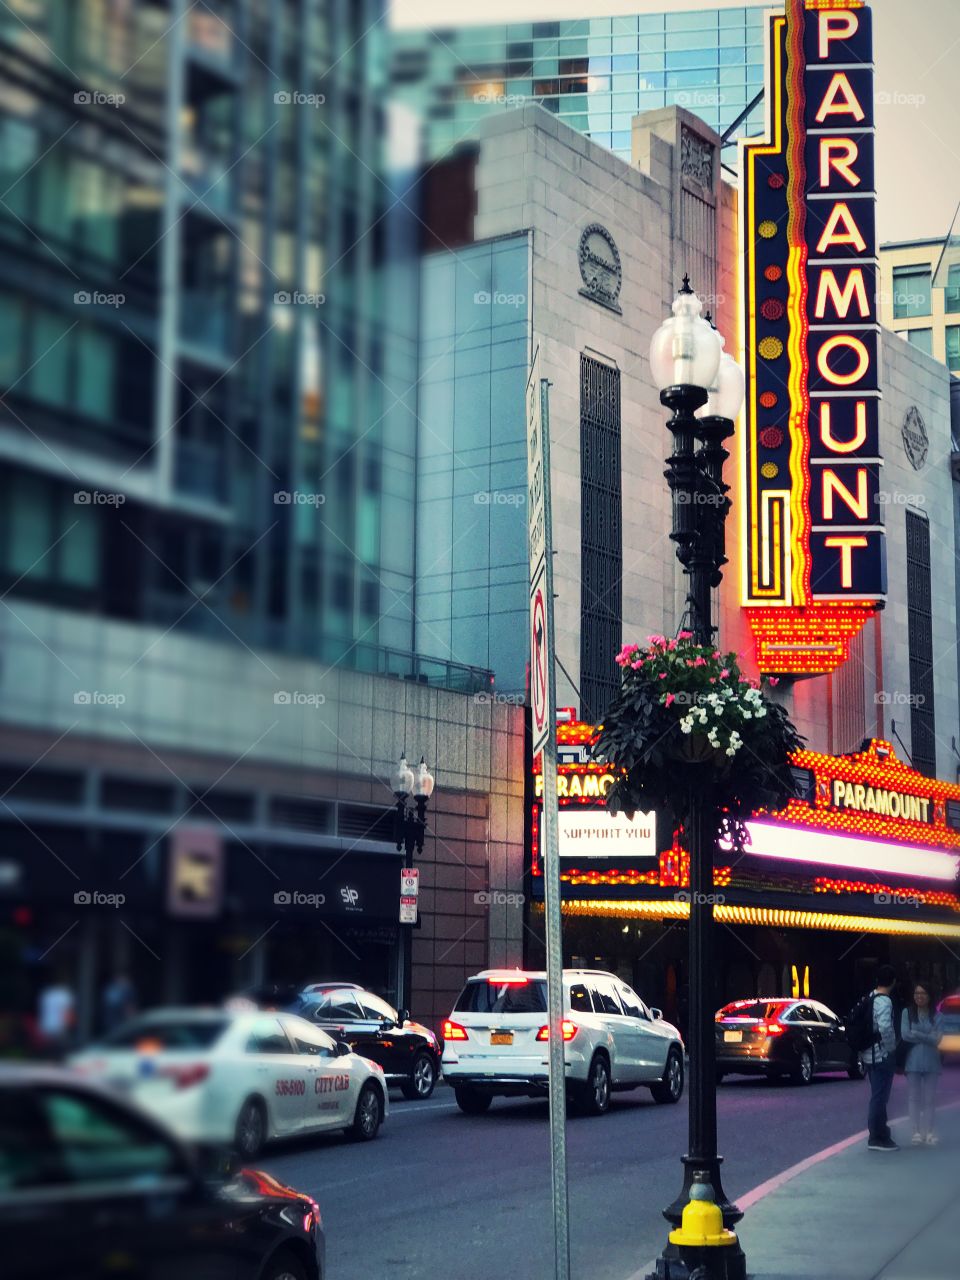 Paramount theaters in Boston